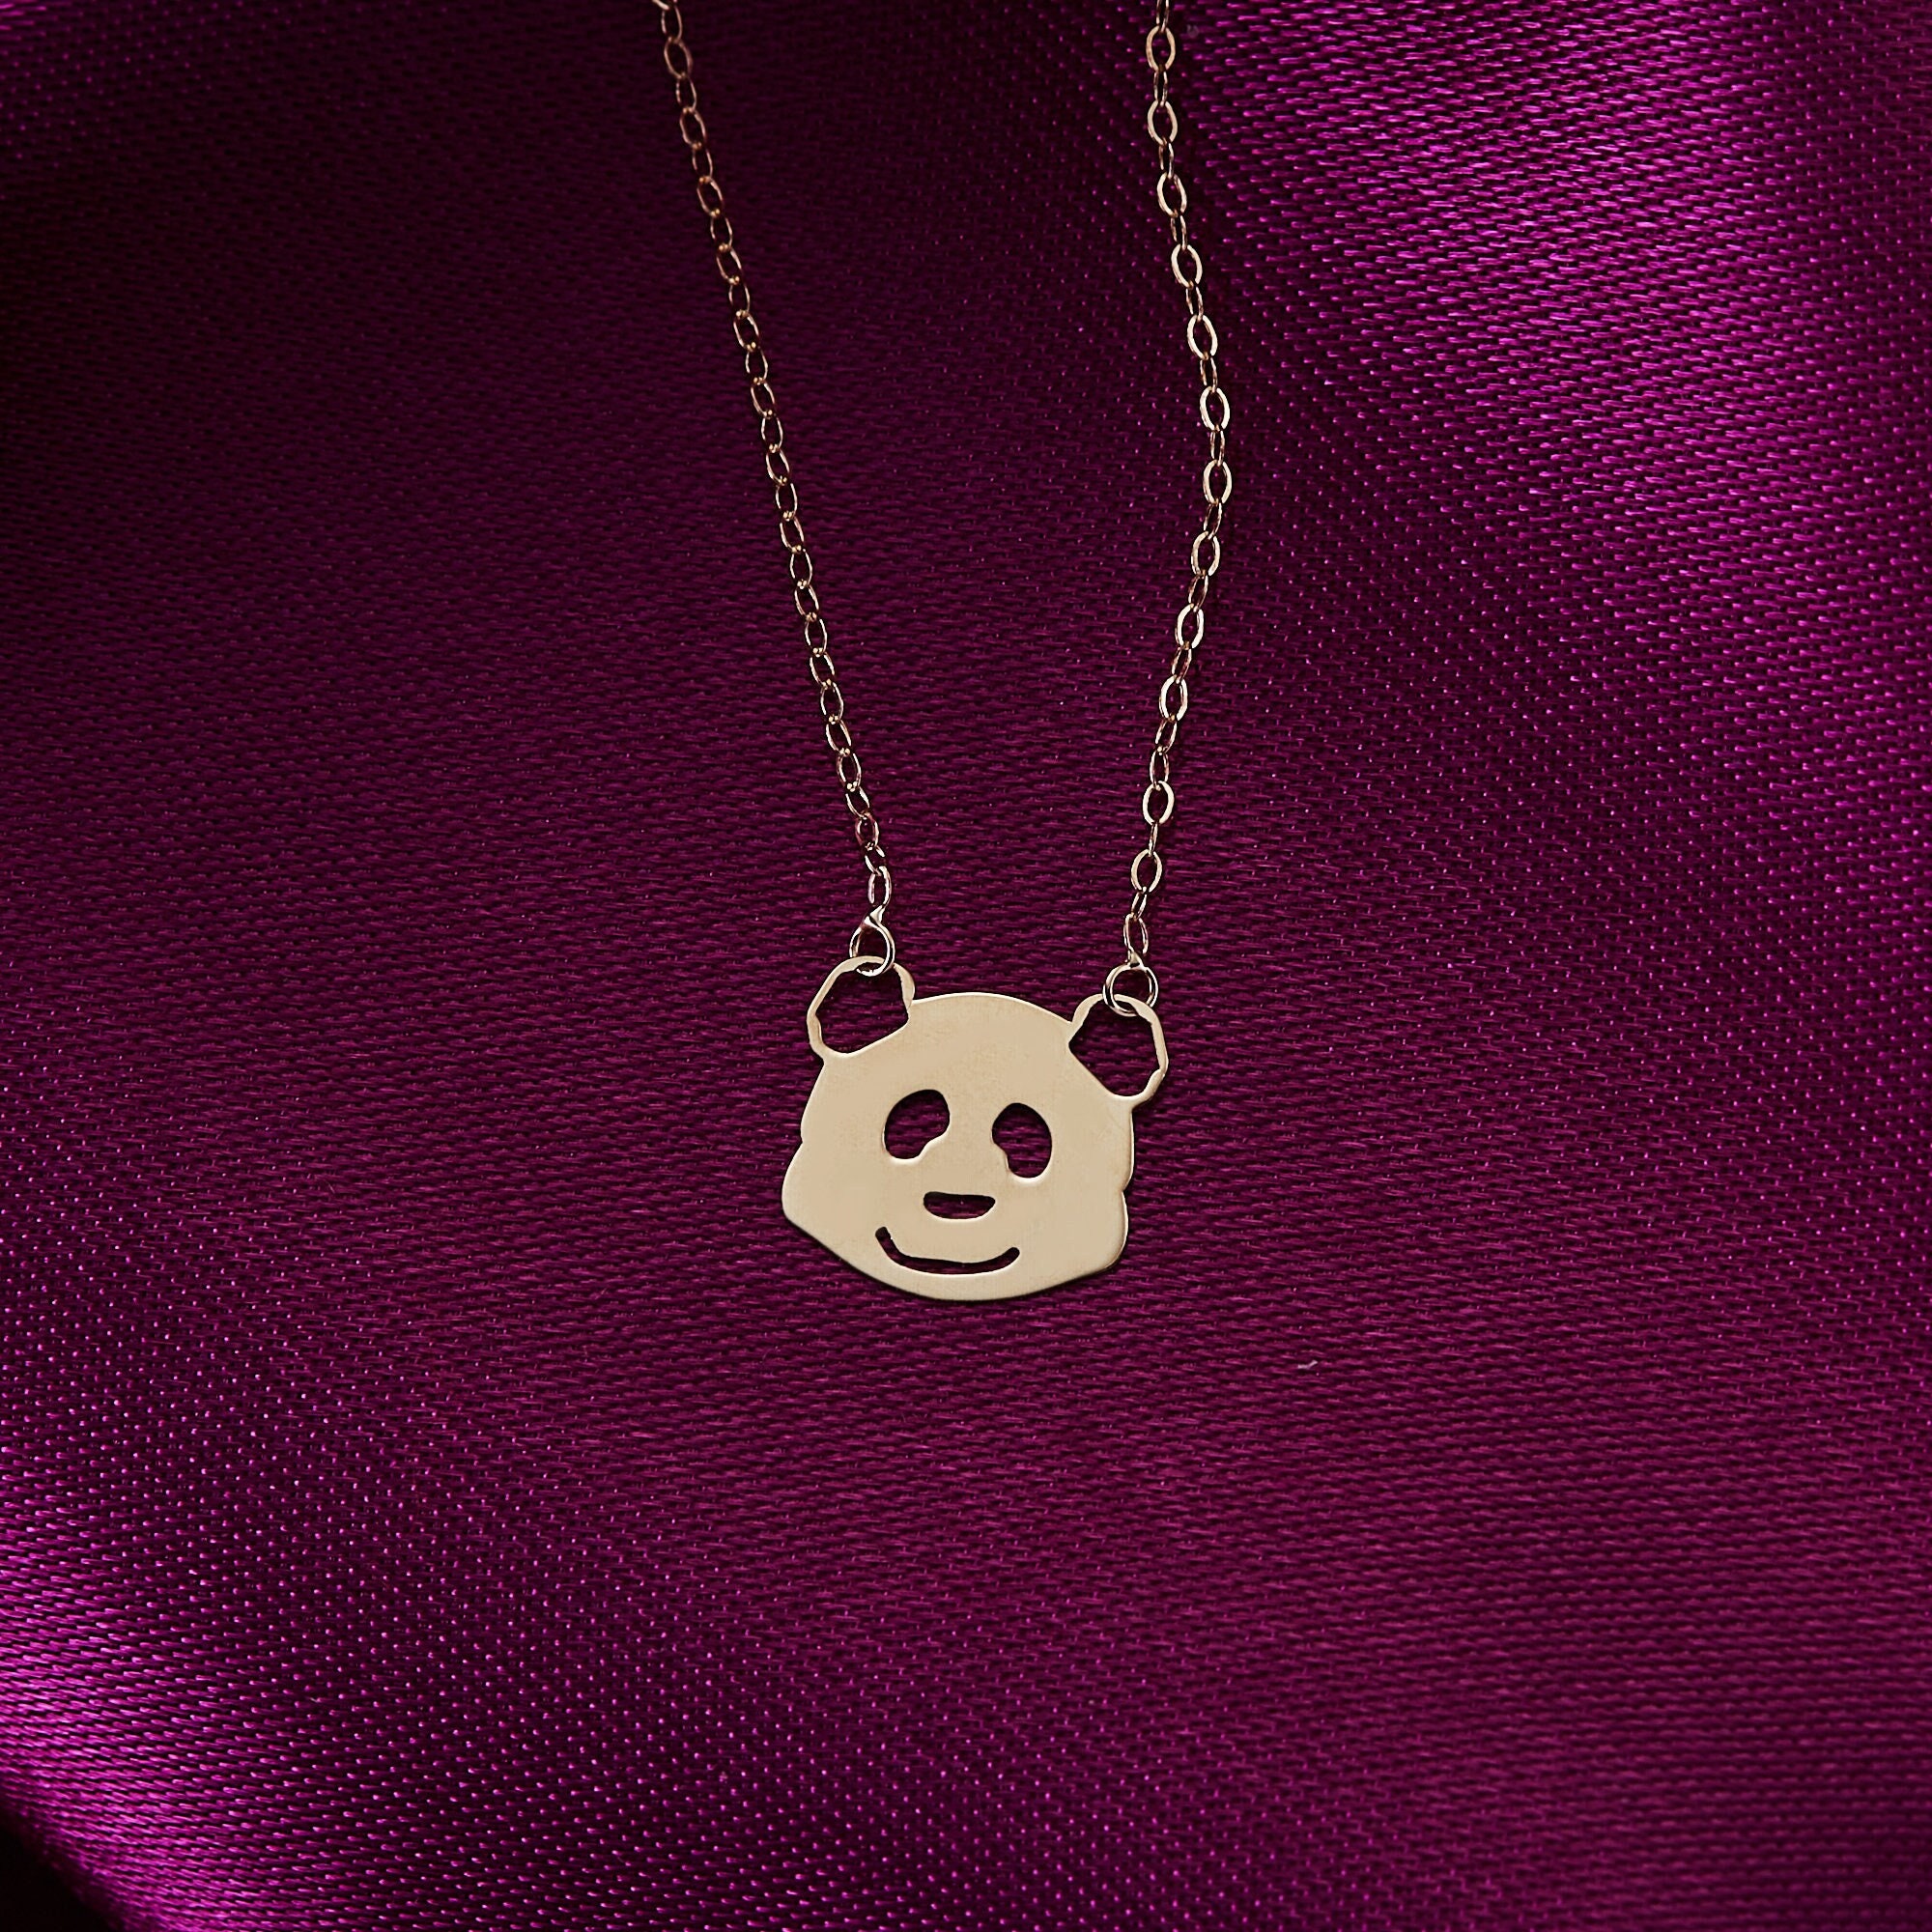 Panda Pendant Hip Hop Necklace | Panda necklace, Hops necklace, Pendant  necklace